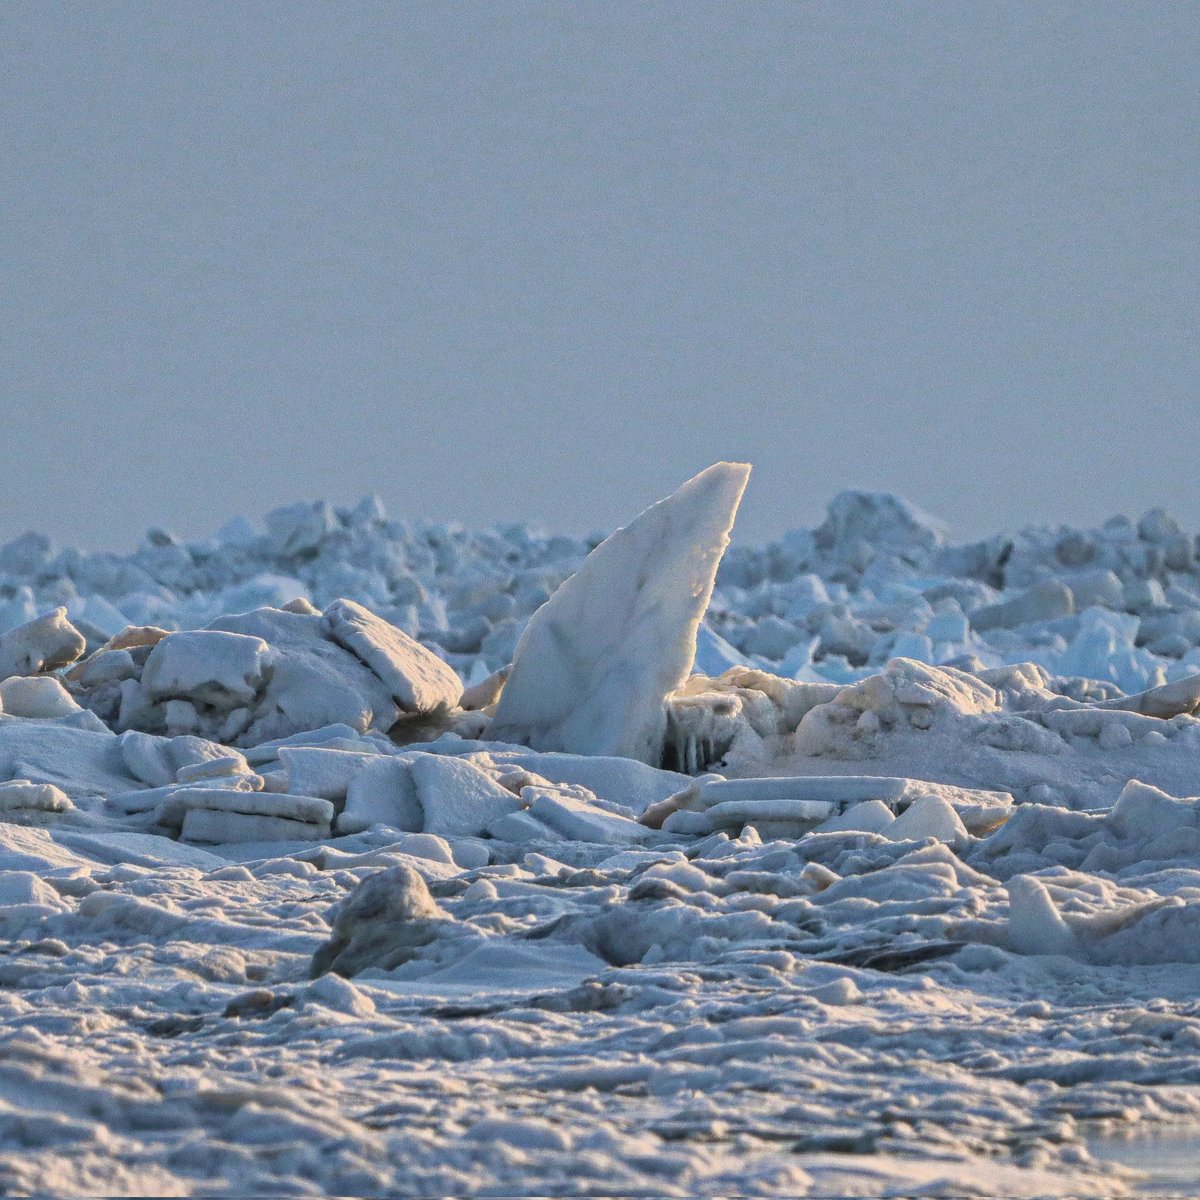 No swimming! #ice #seaice #ocean #sea #arctic #arcticocean #blue #white #coolcolors #north #alaska